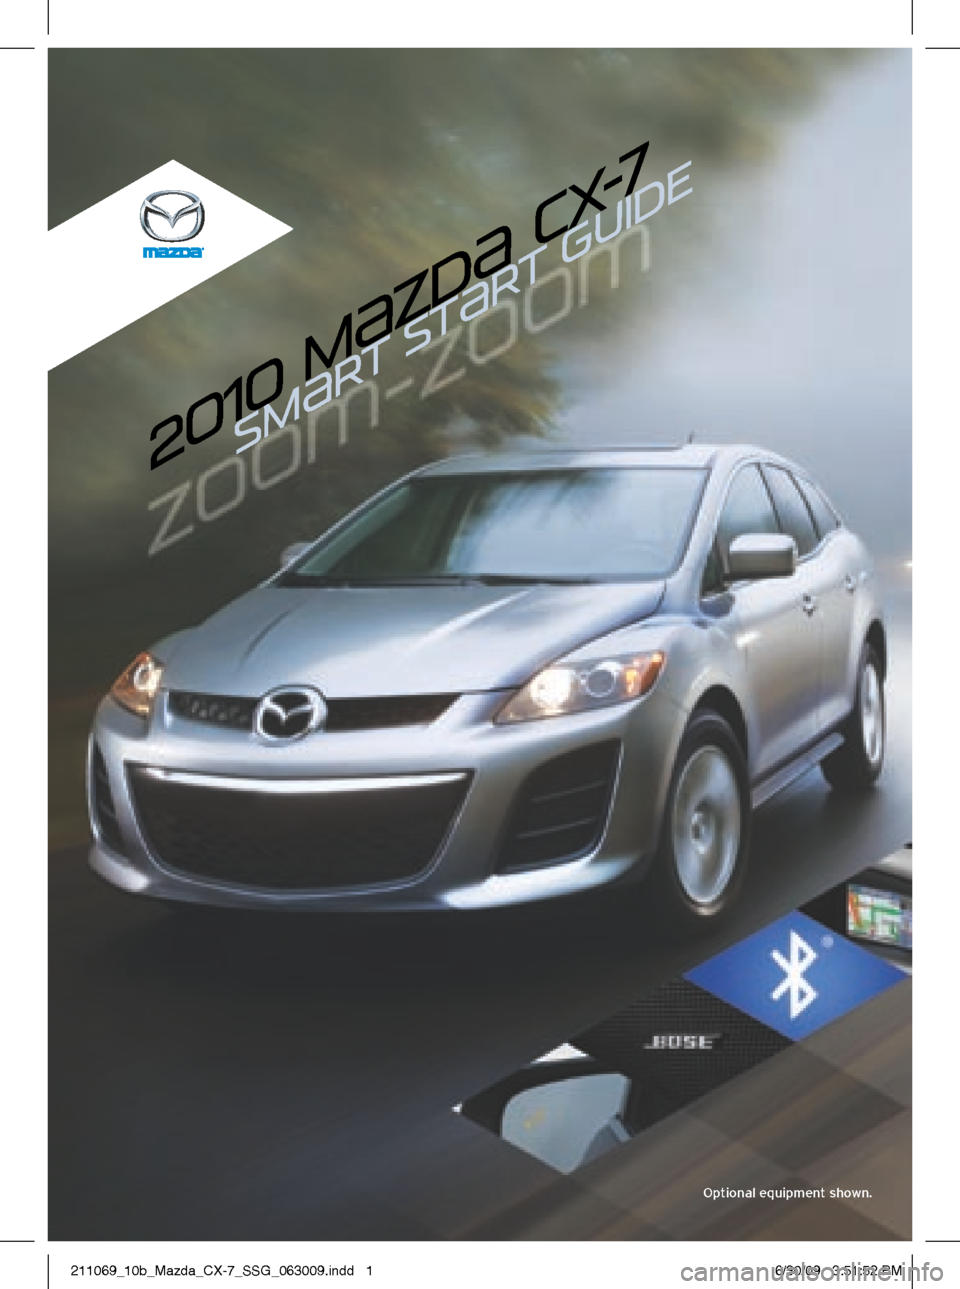 MAZDA MODEL CX-7 2010  Smart Start Guide (in English) 2010 m{ZD{  CX-7SM{RT ST{RT GUIDE
Optional equipment shown.
211069_10b_Mazda_CX-7_SSG_063009.indd   16/30/09   3:51:52 PM 